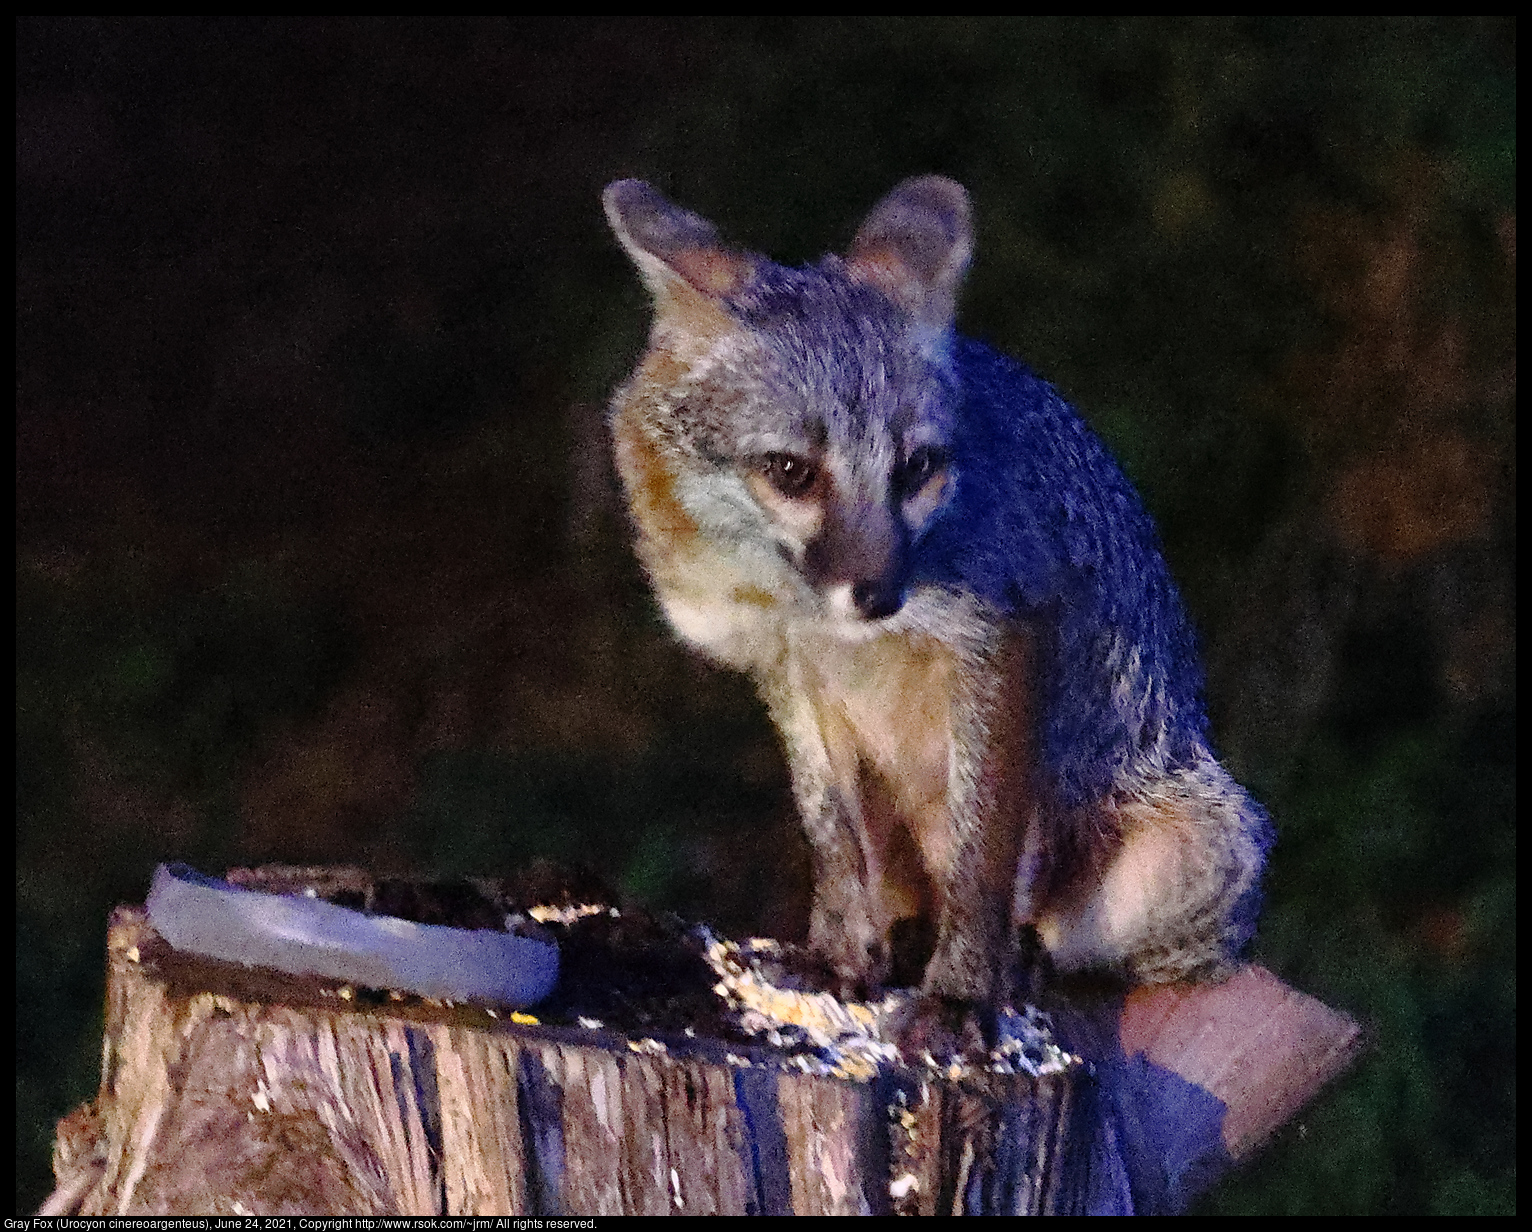 Gray Fox (Urocyon cinereoargenteus), June 24, 2021